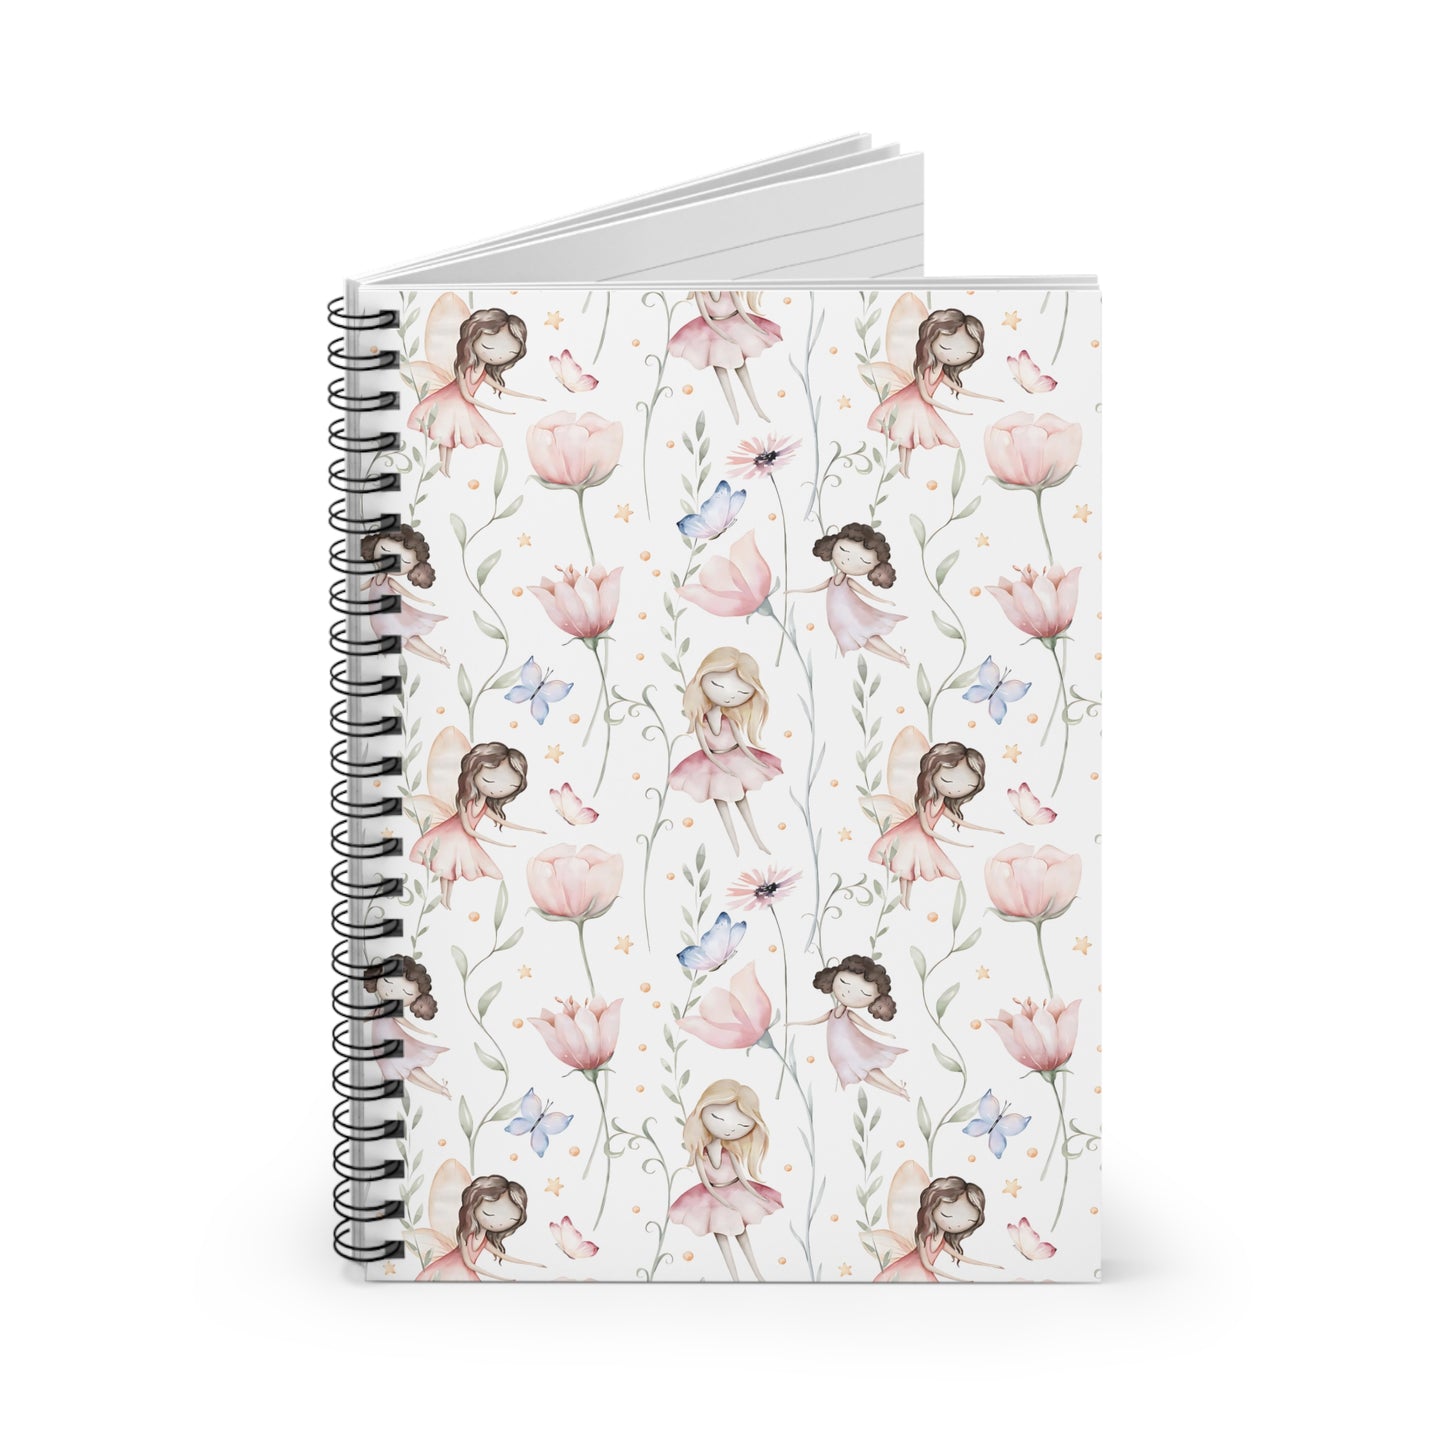 Sleepy Fairy Spiral Notebook - Ruled Line